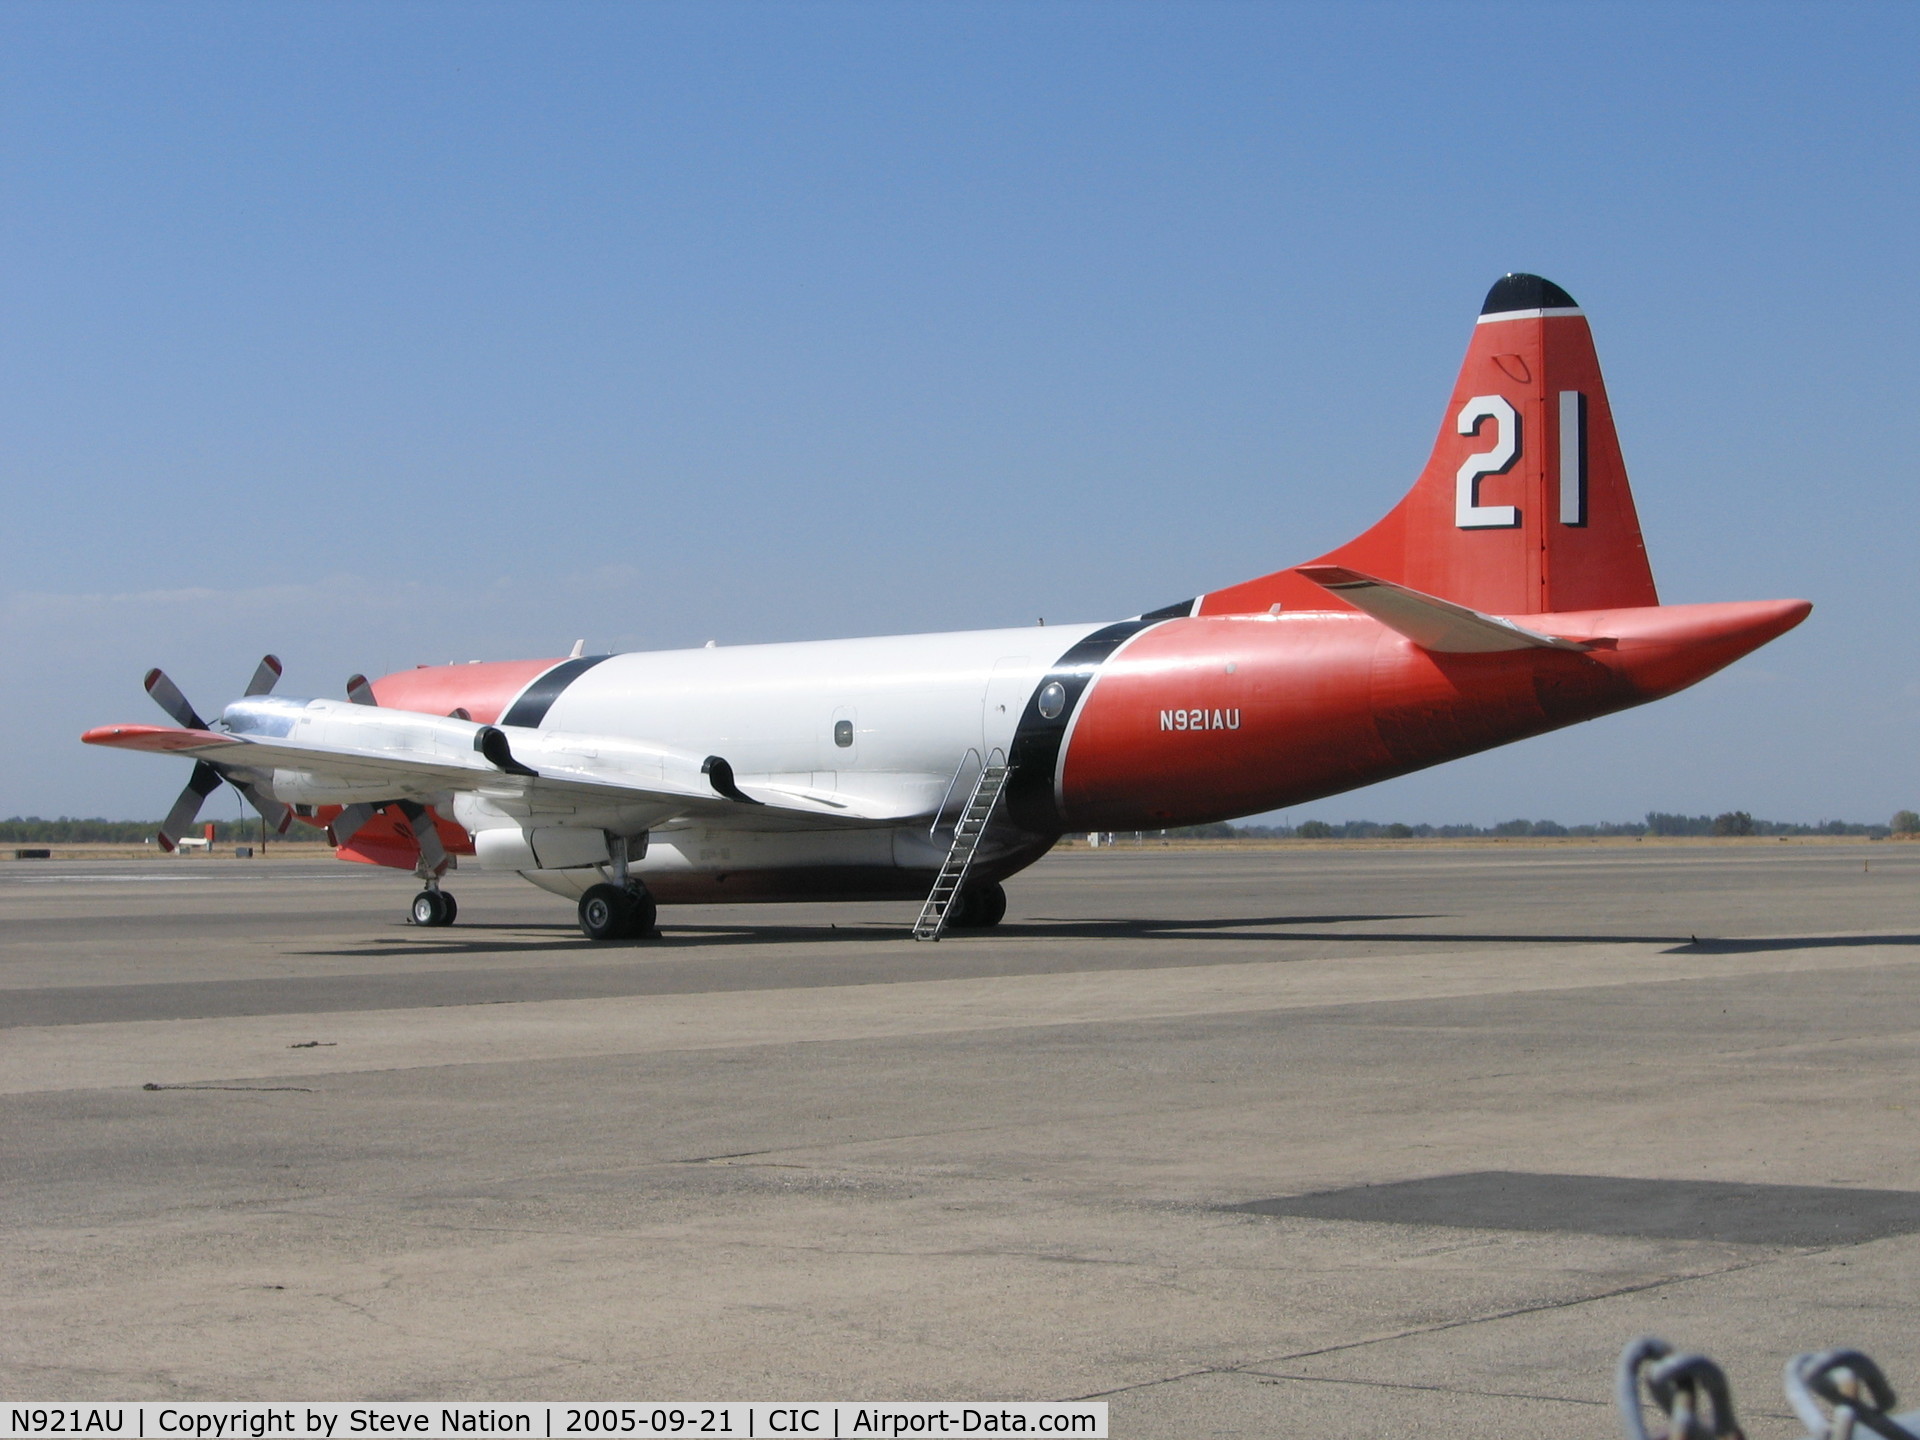 N921AU, Lockheed P-3A Aerostar C/N 185-5098, Aero Union P-3A Orion tanker #21 (BuAer 151385) at Chico Municipal Airport, CA